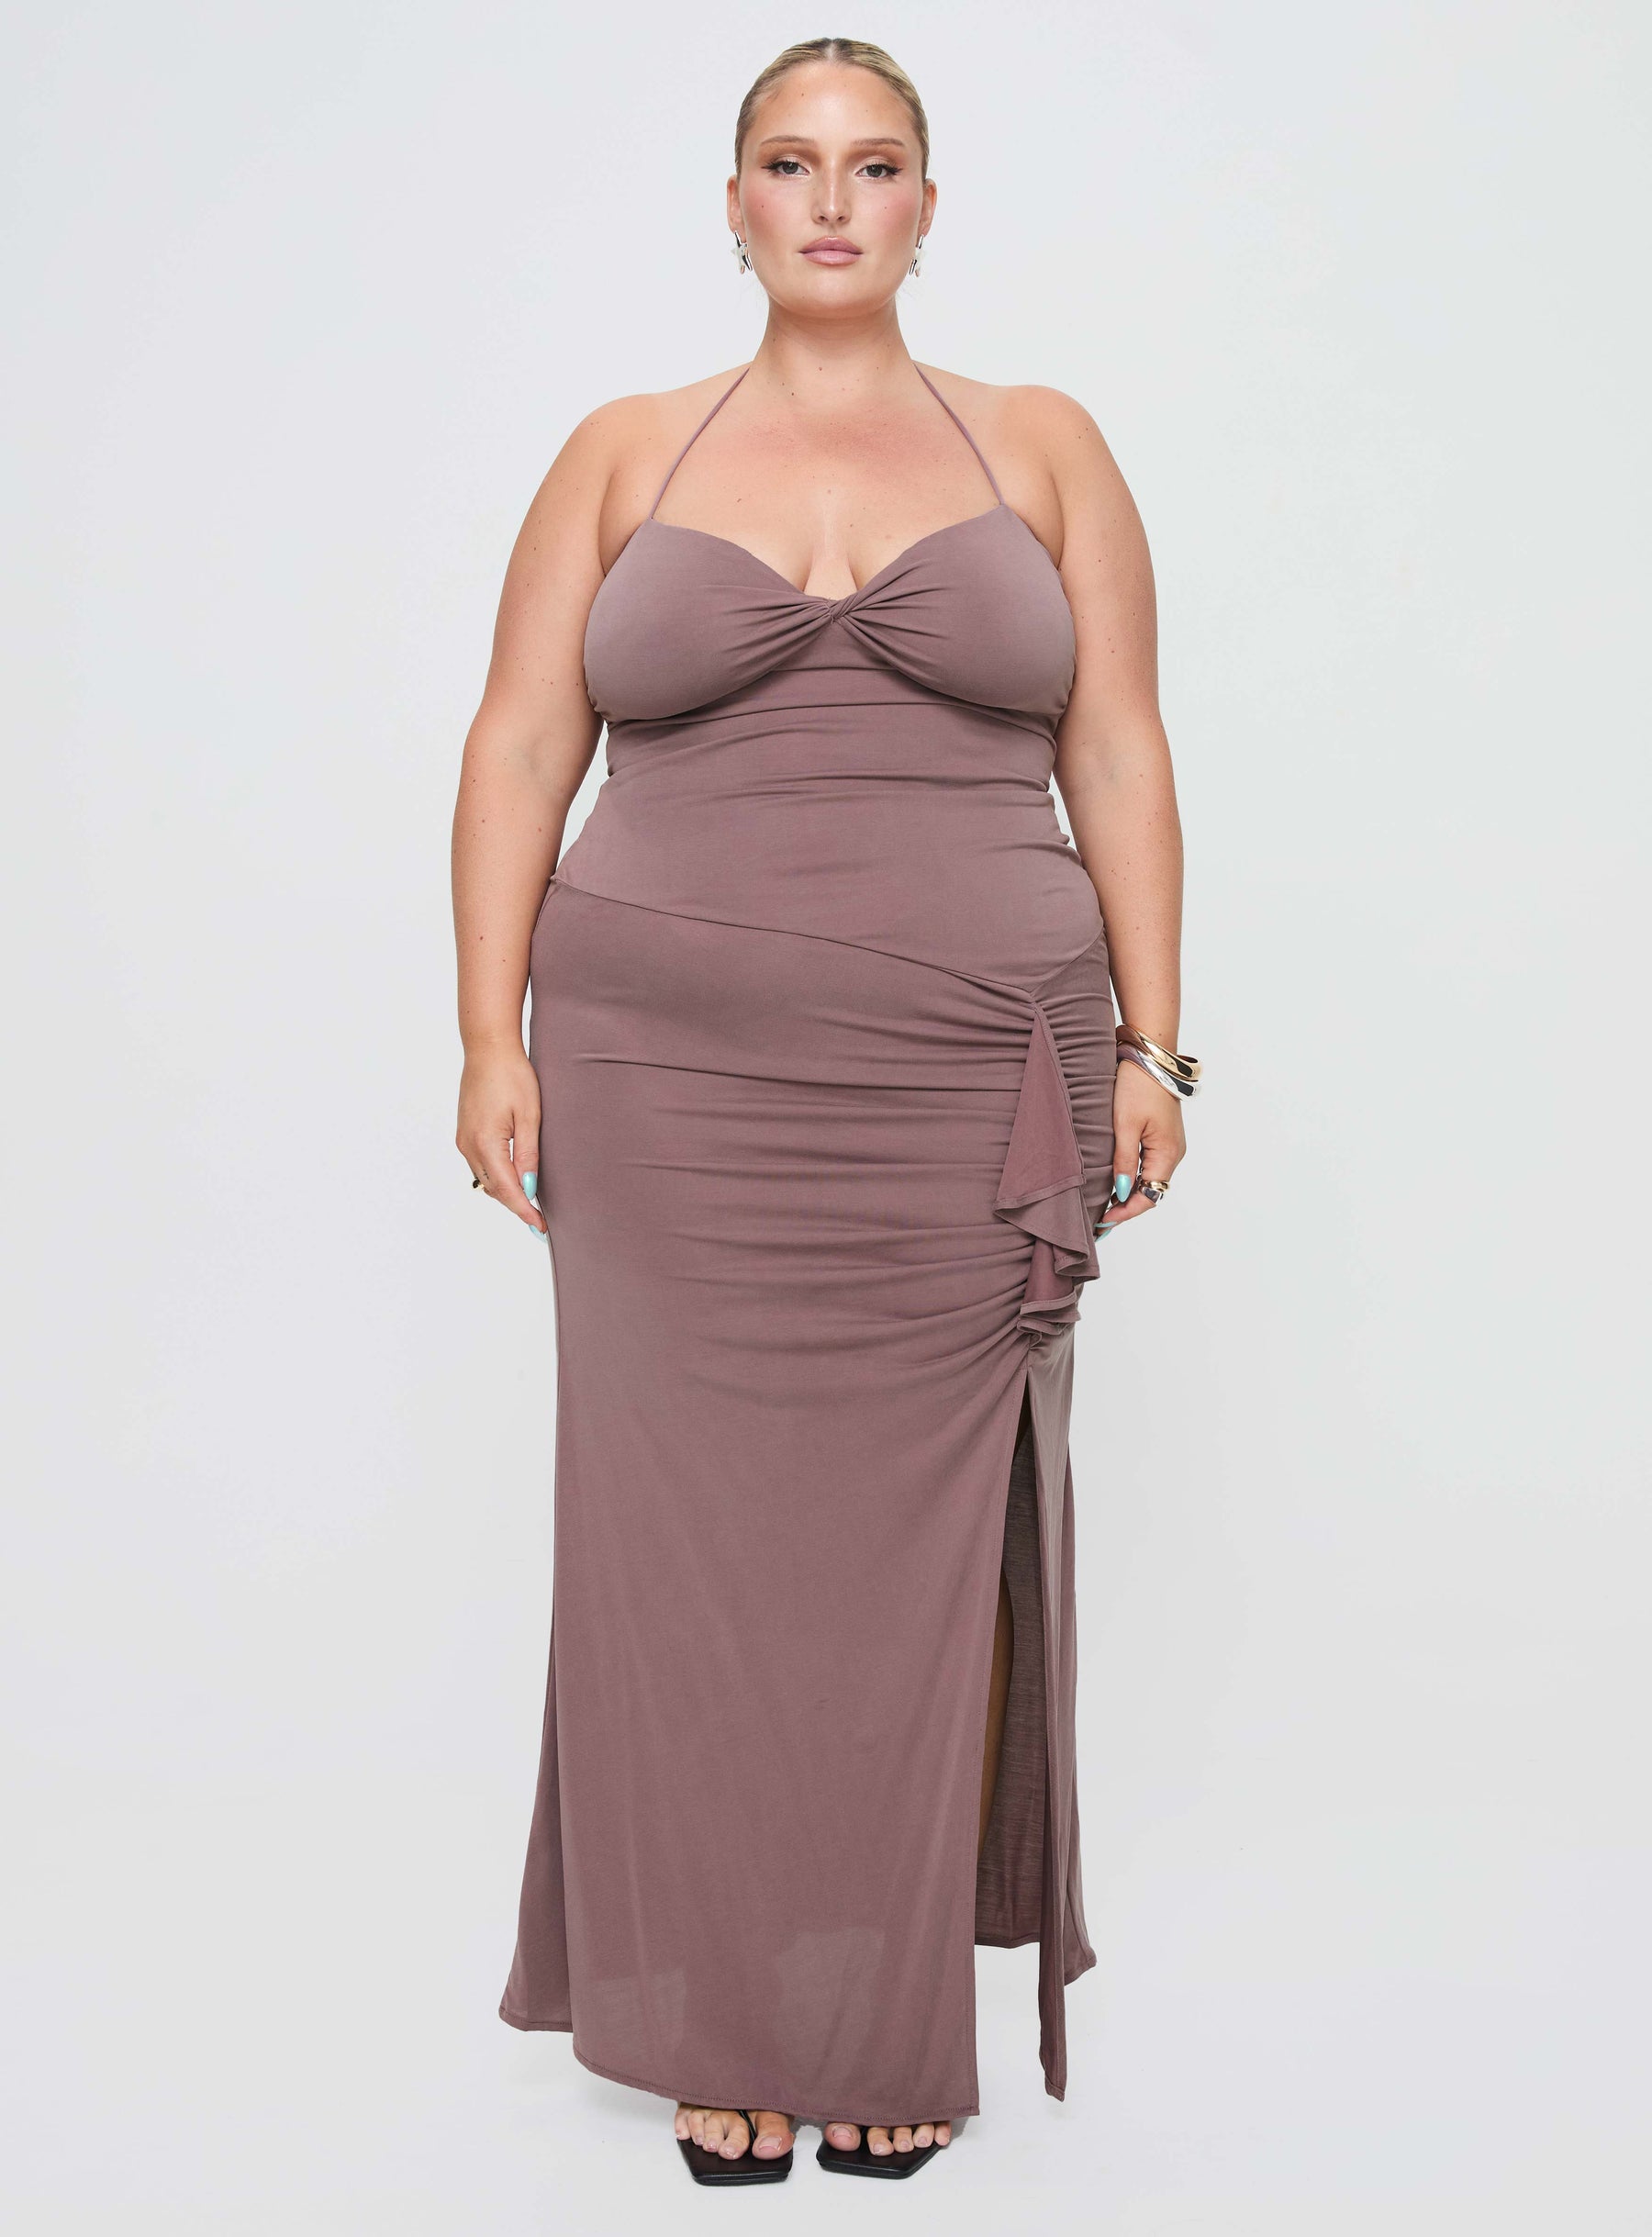 Shop Formal Dress - Destinations Maxi Dress Mauve Curve featured image